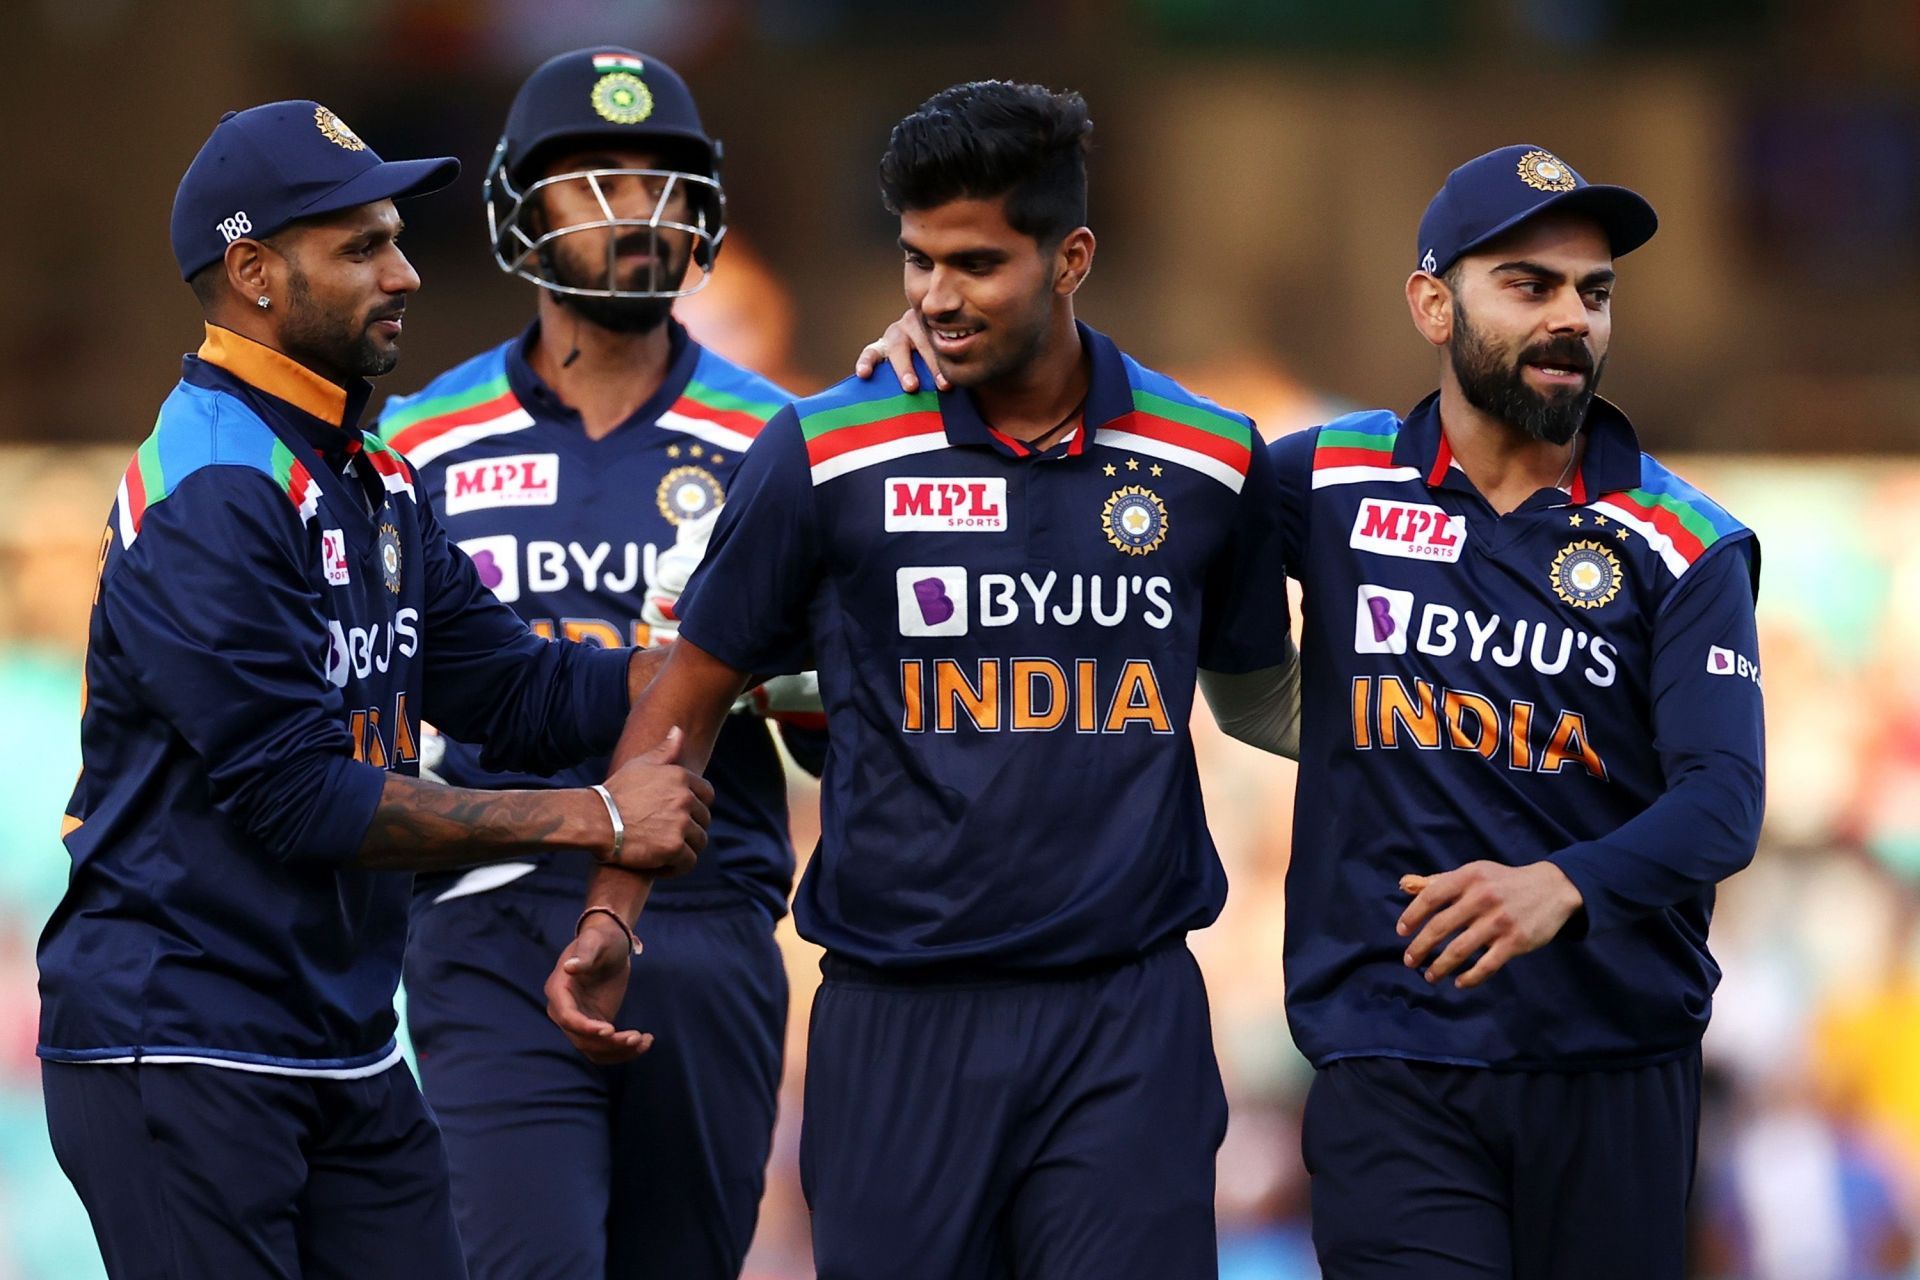 Washington Sundar has played just a solitary ODI for Team India